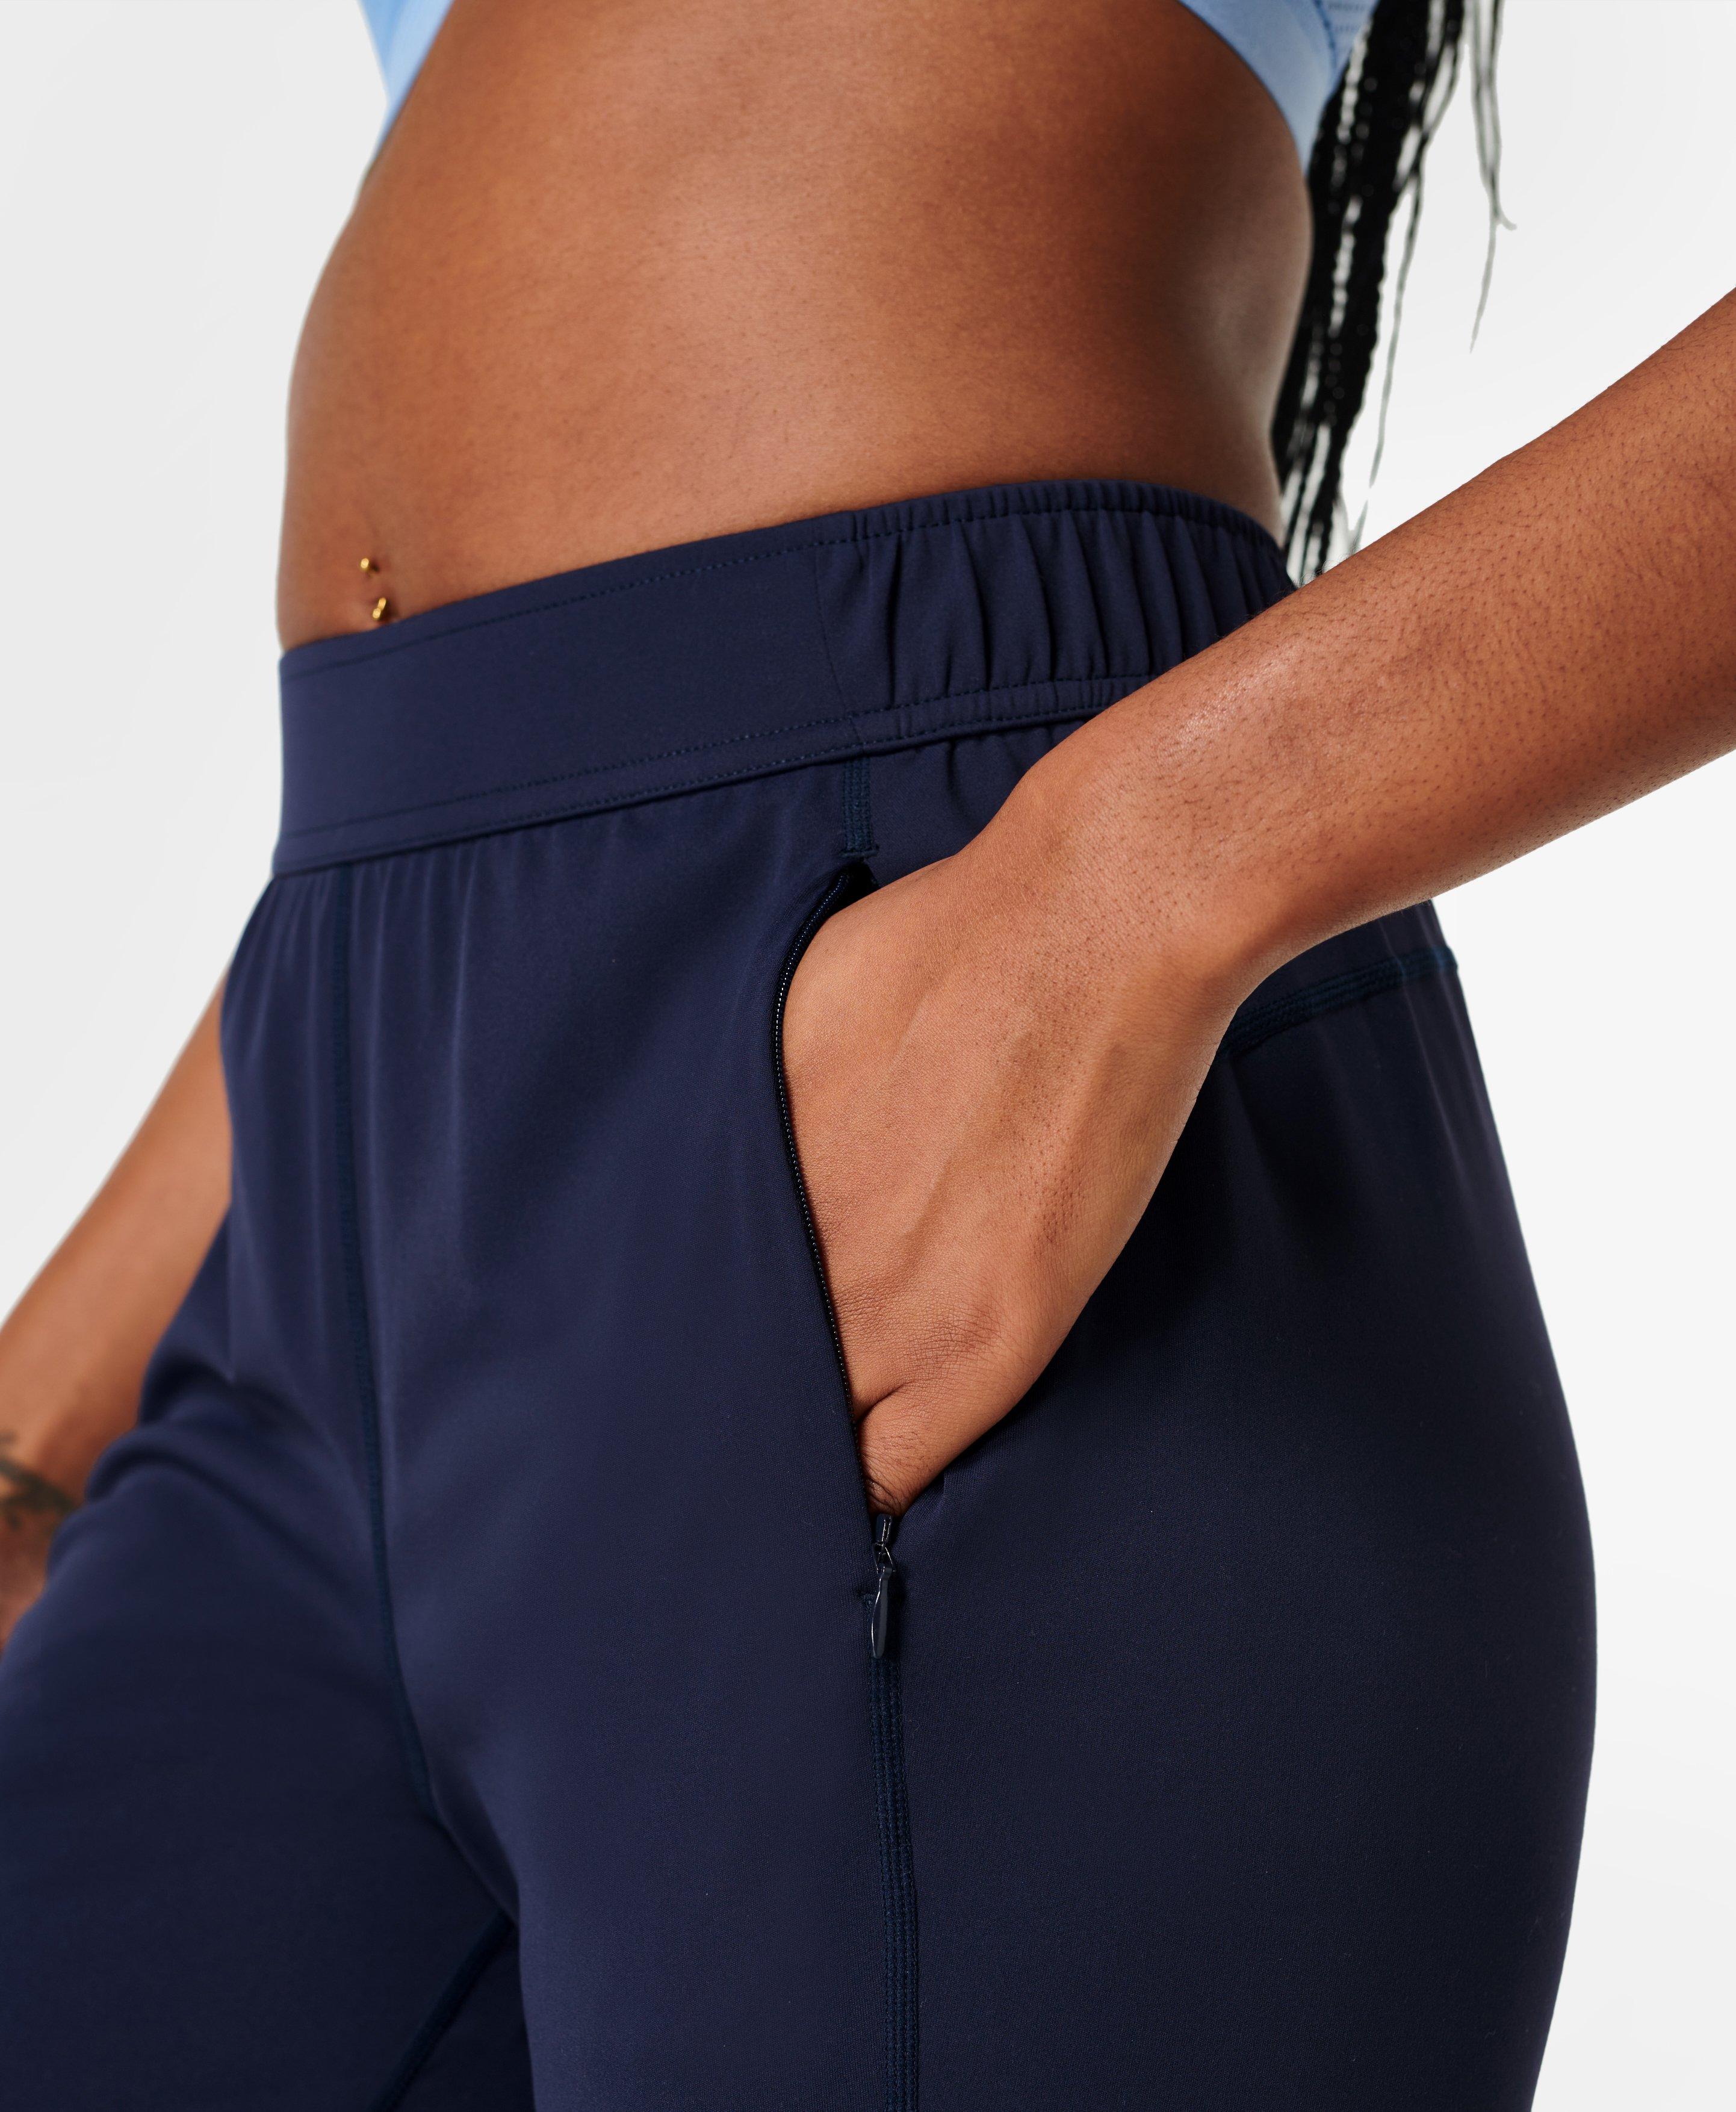 Women’s Gymshark Leggings Joggers Pants Navy Blue Elastic Waist Size Large